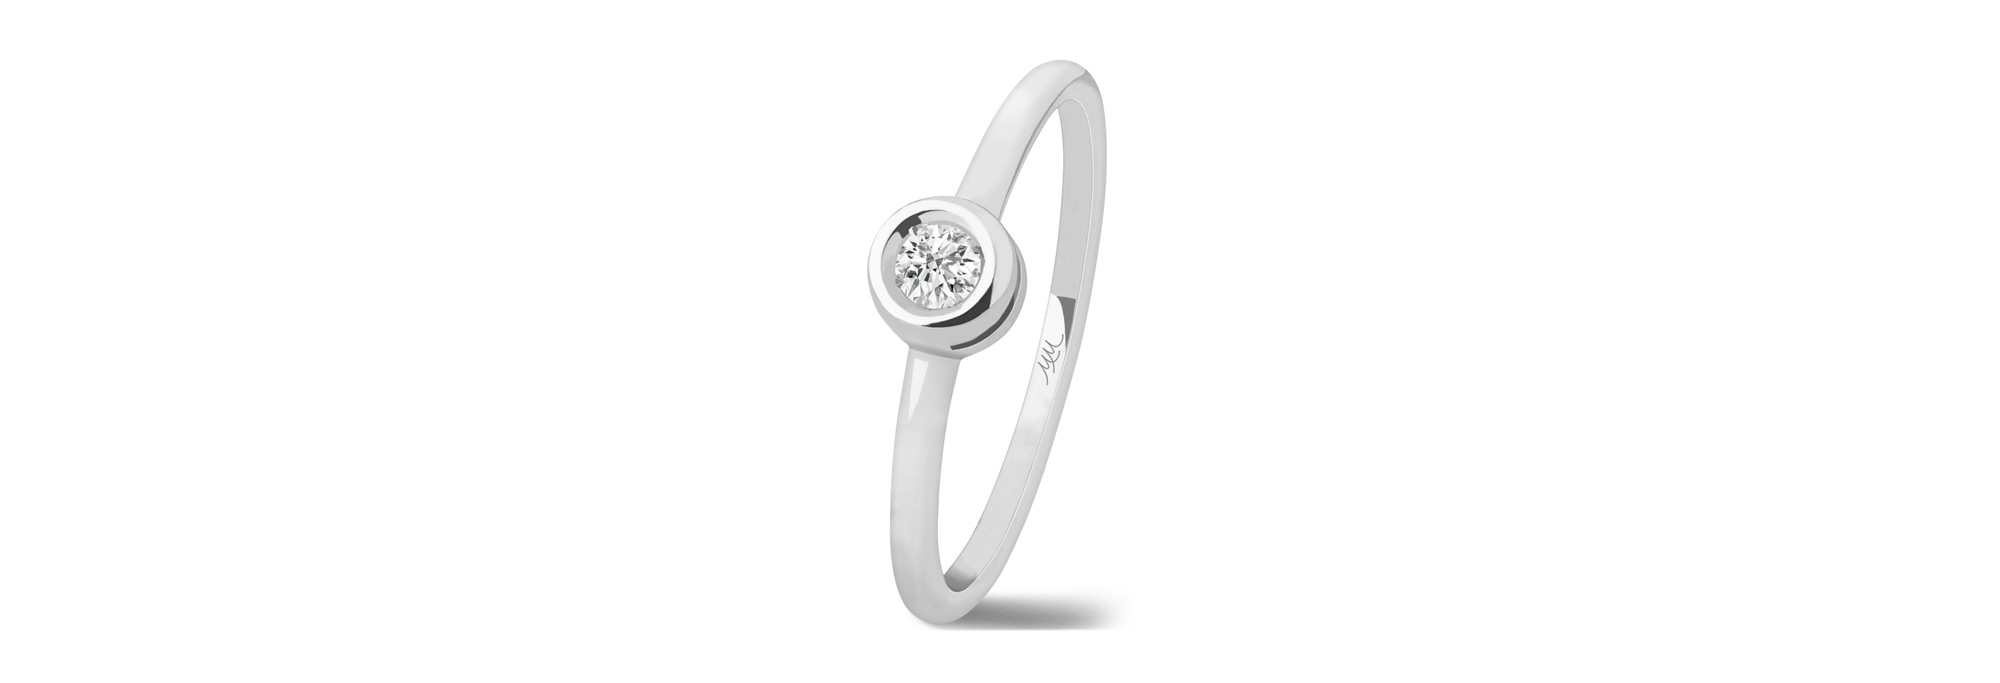 alejandra anillo oro blanco con diamante - regalos de lujo alicante - anillos compromiso online - joyeria marga mira